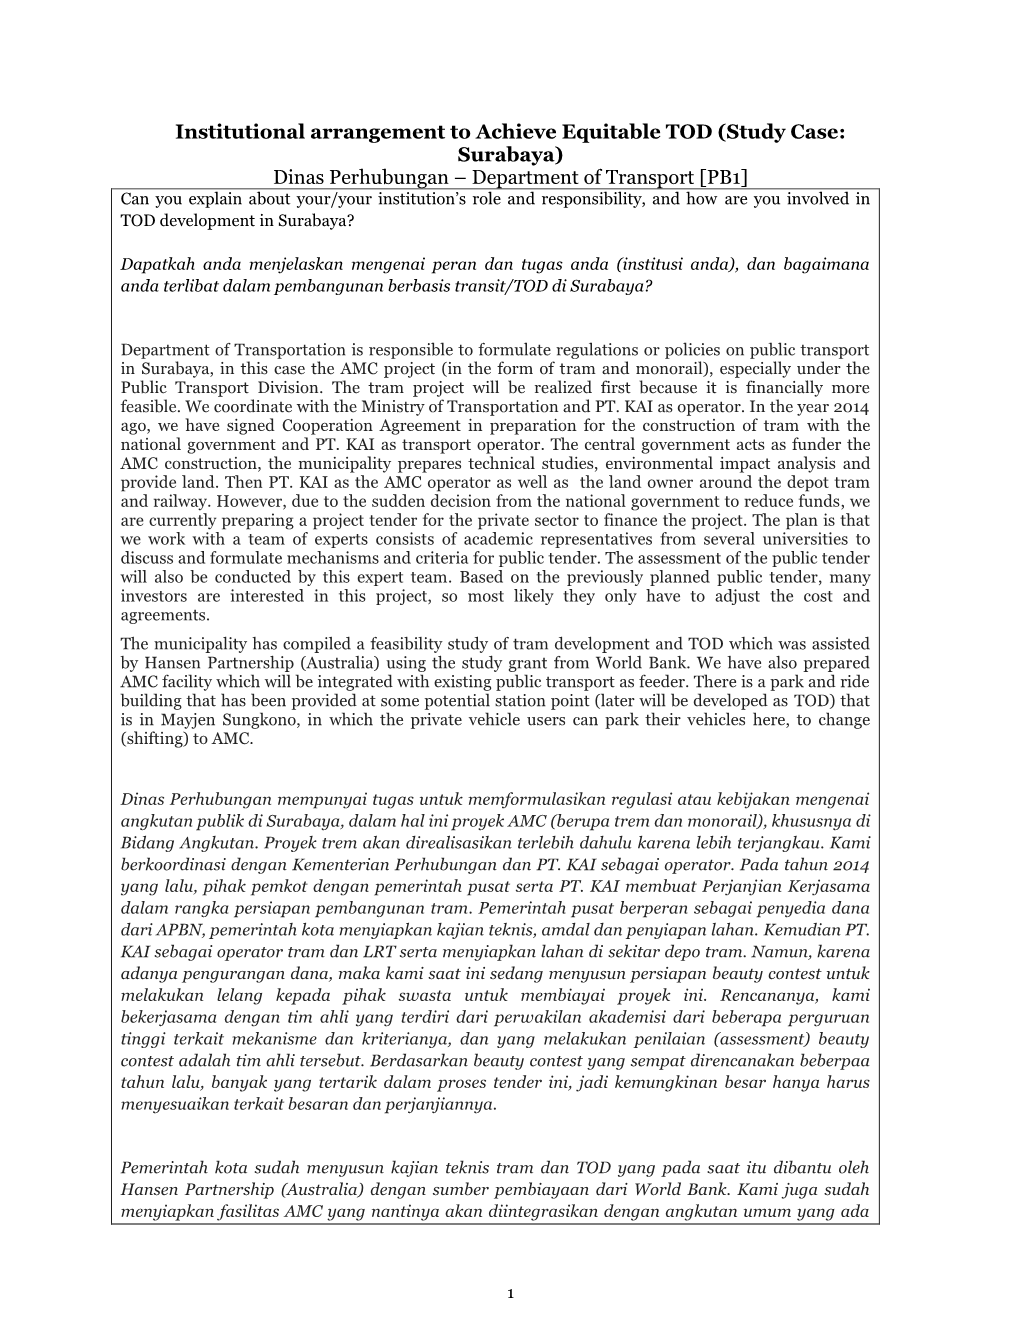 Institutional Arrangement to Achieve Equitable TOD (Study Case: Surabaya) Dinas Perhubungan – Department of Transport [PB1]